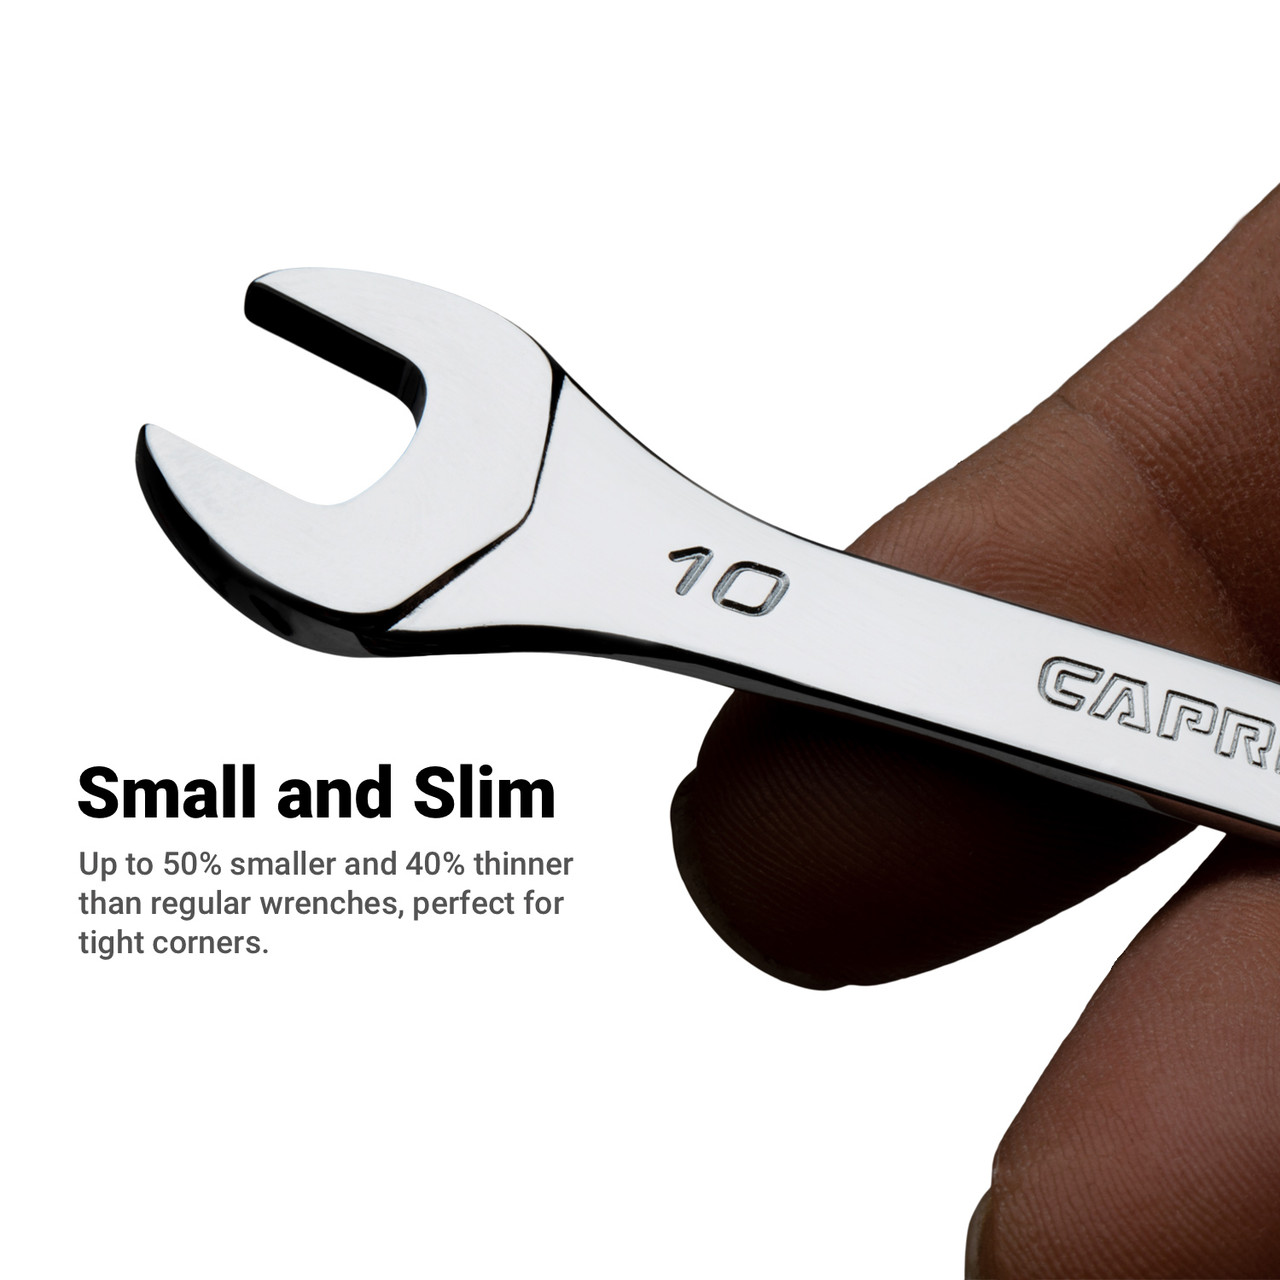 Capri Tools 3.2 mm x 5.5 mm Slim Mini Open End Wrench, Metric